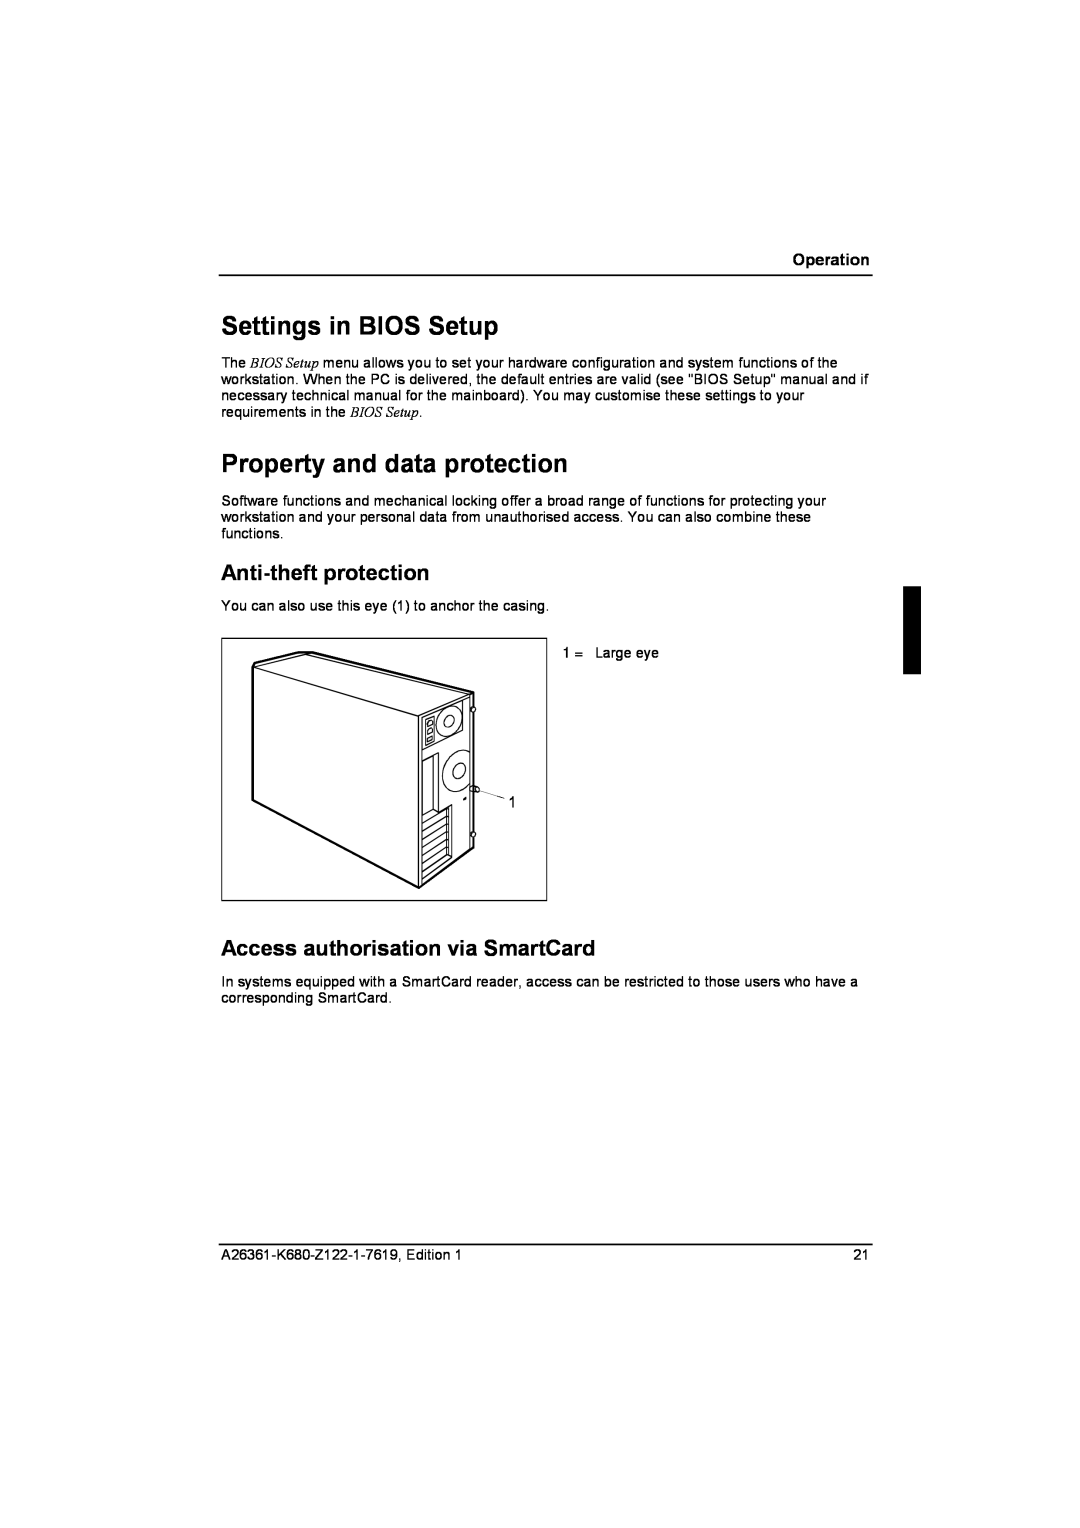 Fujitsu R630, V810 manual Settings in BIOS Setup, Property and data protection, Anti-theft protection, Operation 